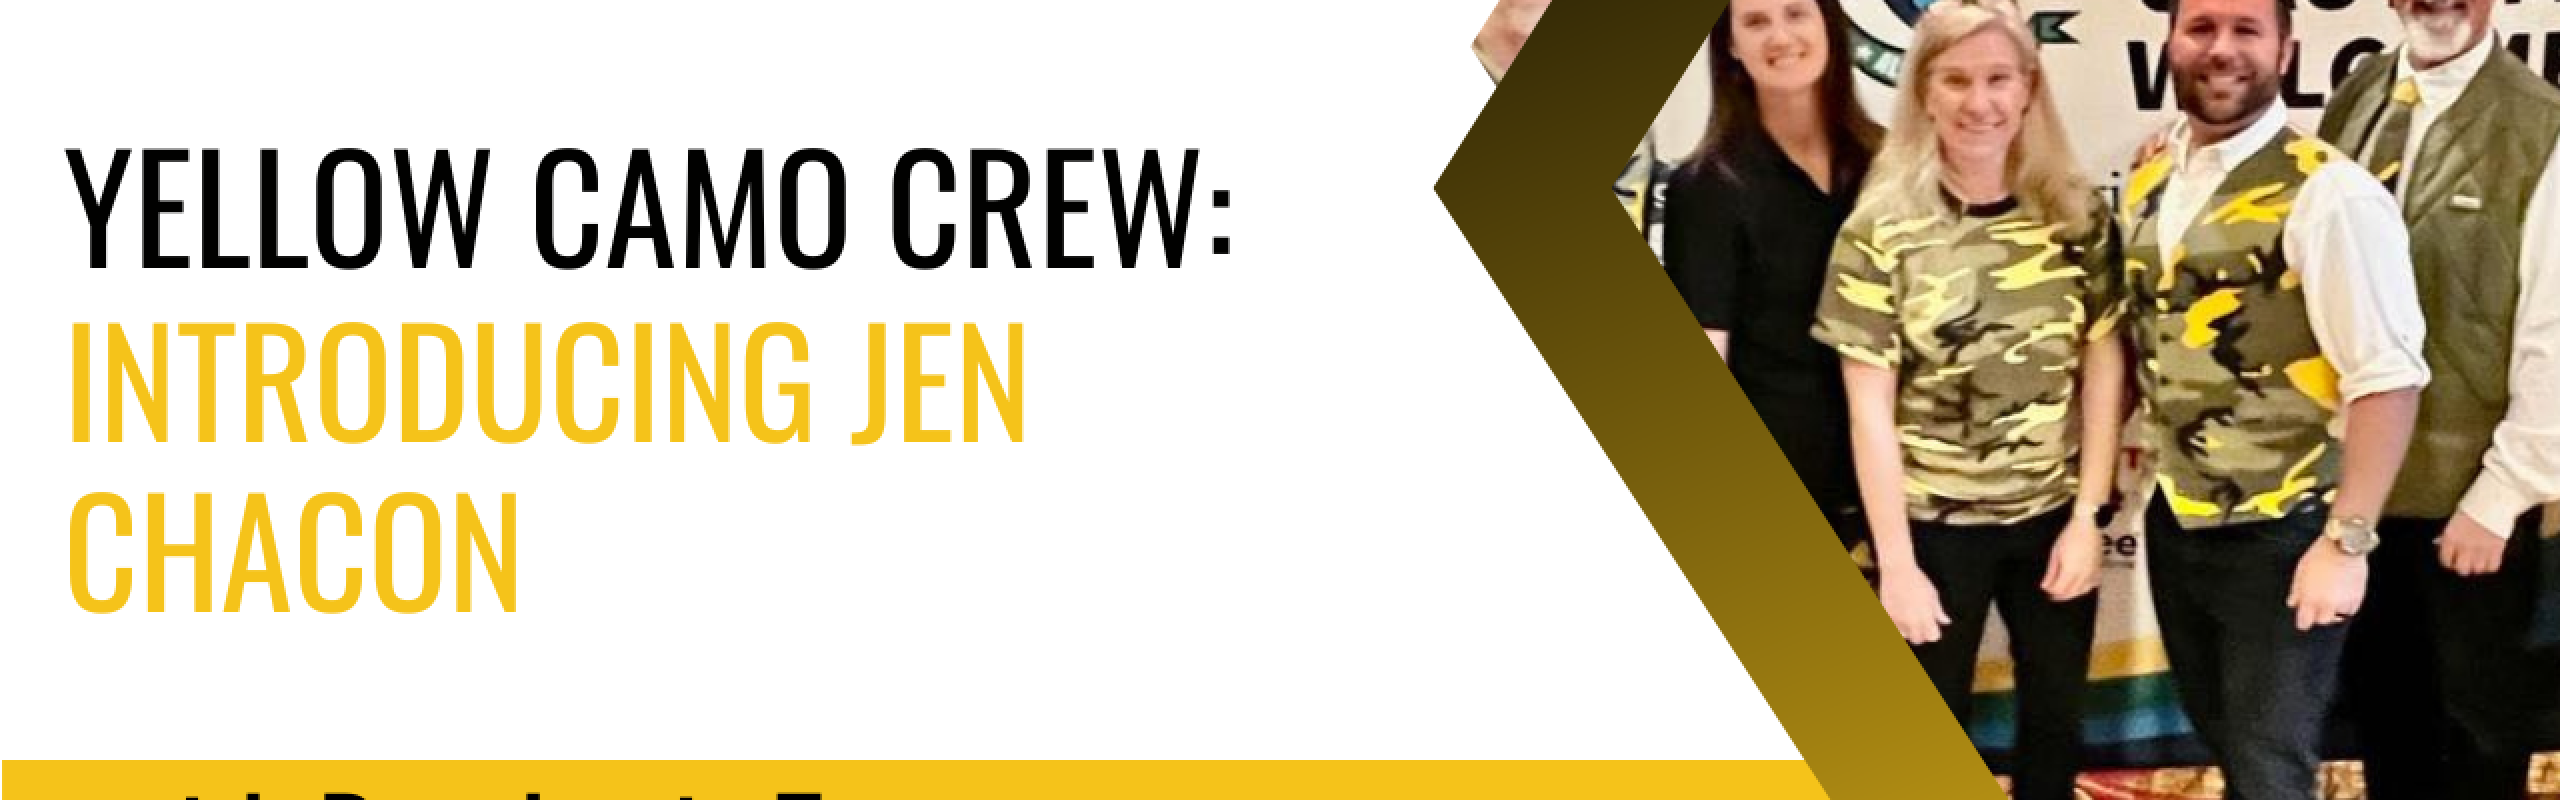 Yellow Camo Crew: Introducing Jen Chacon